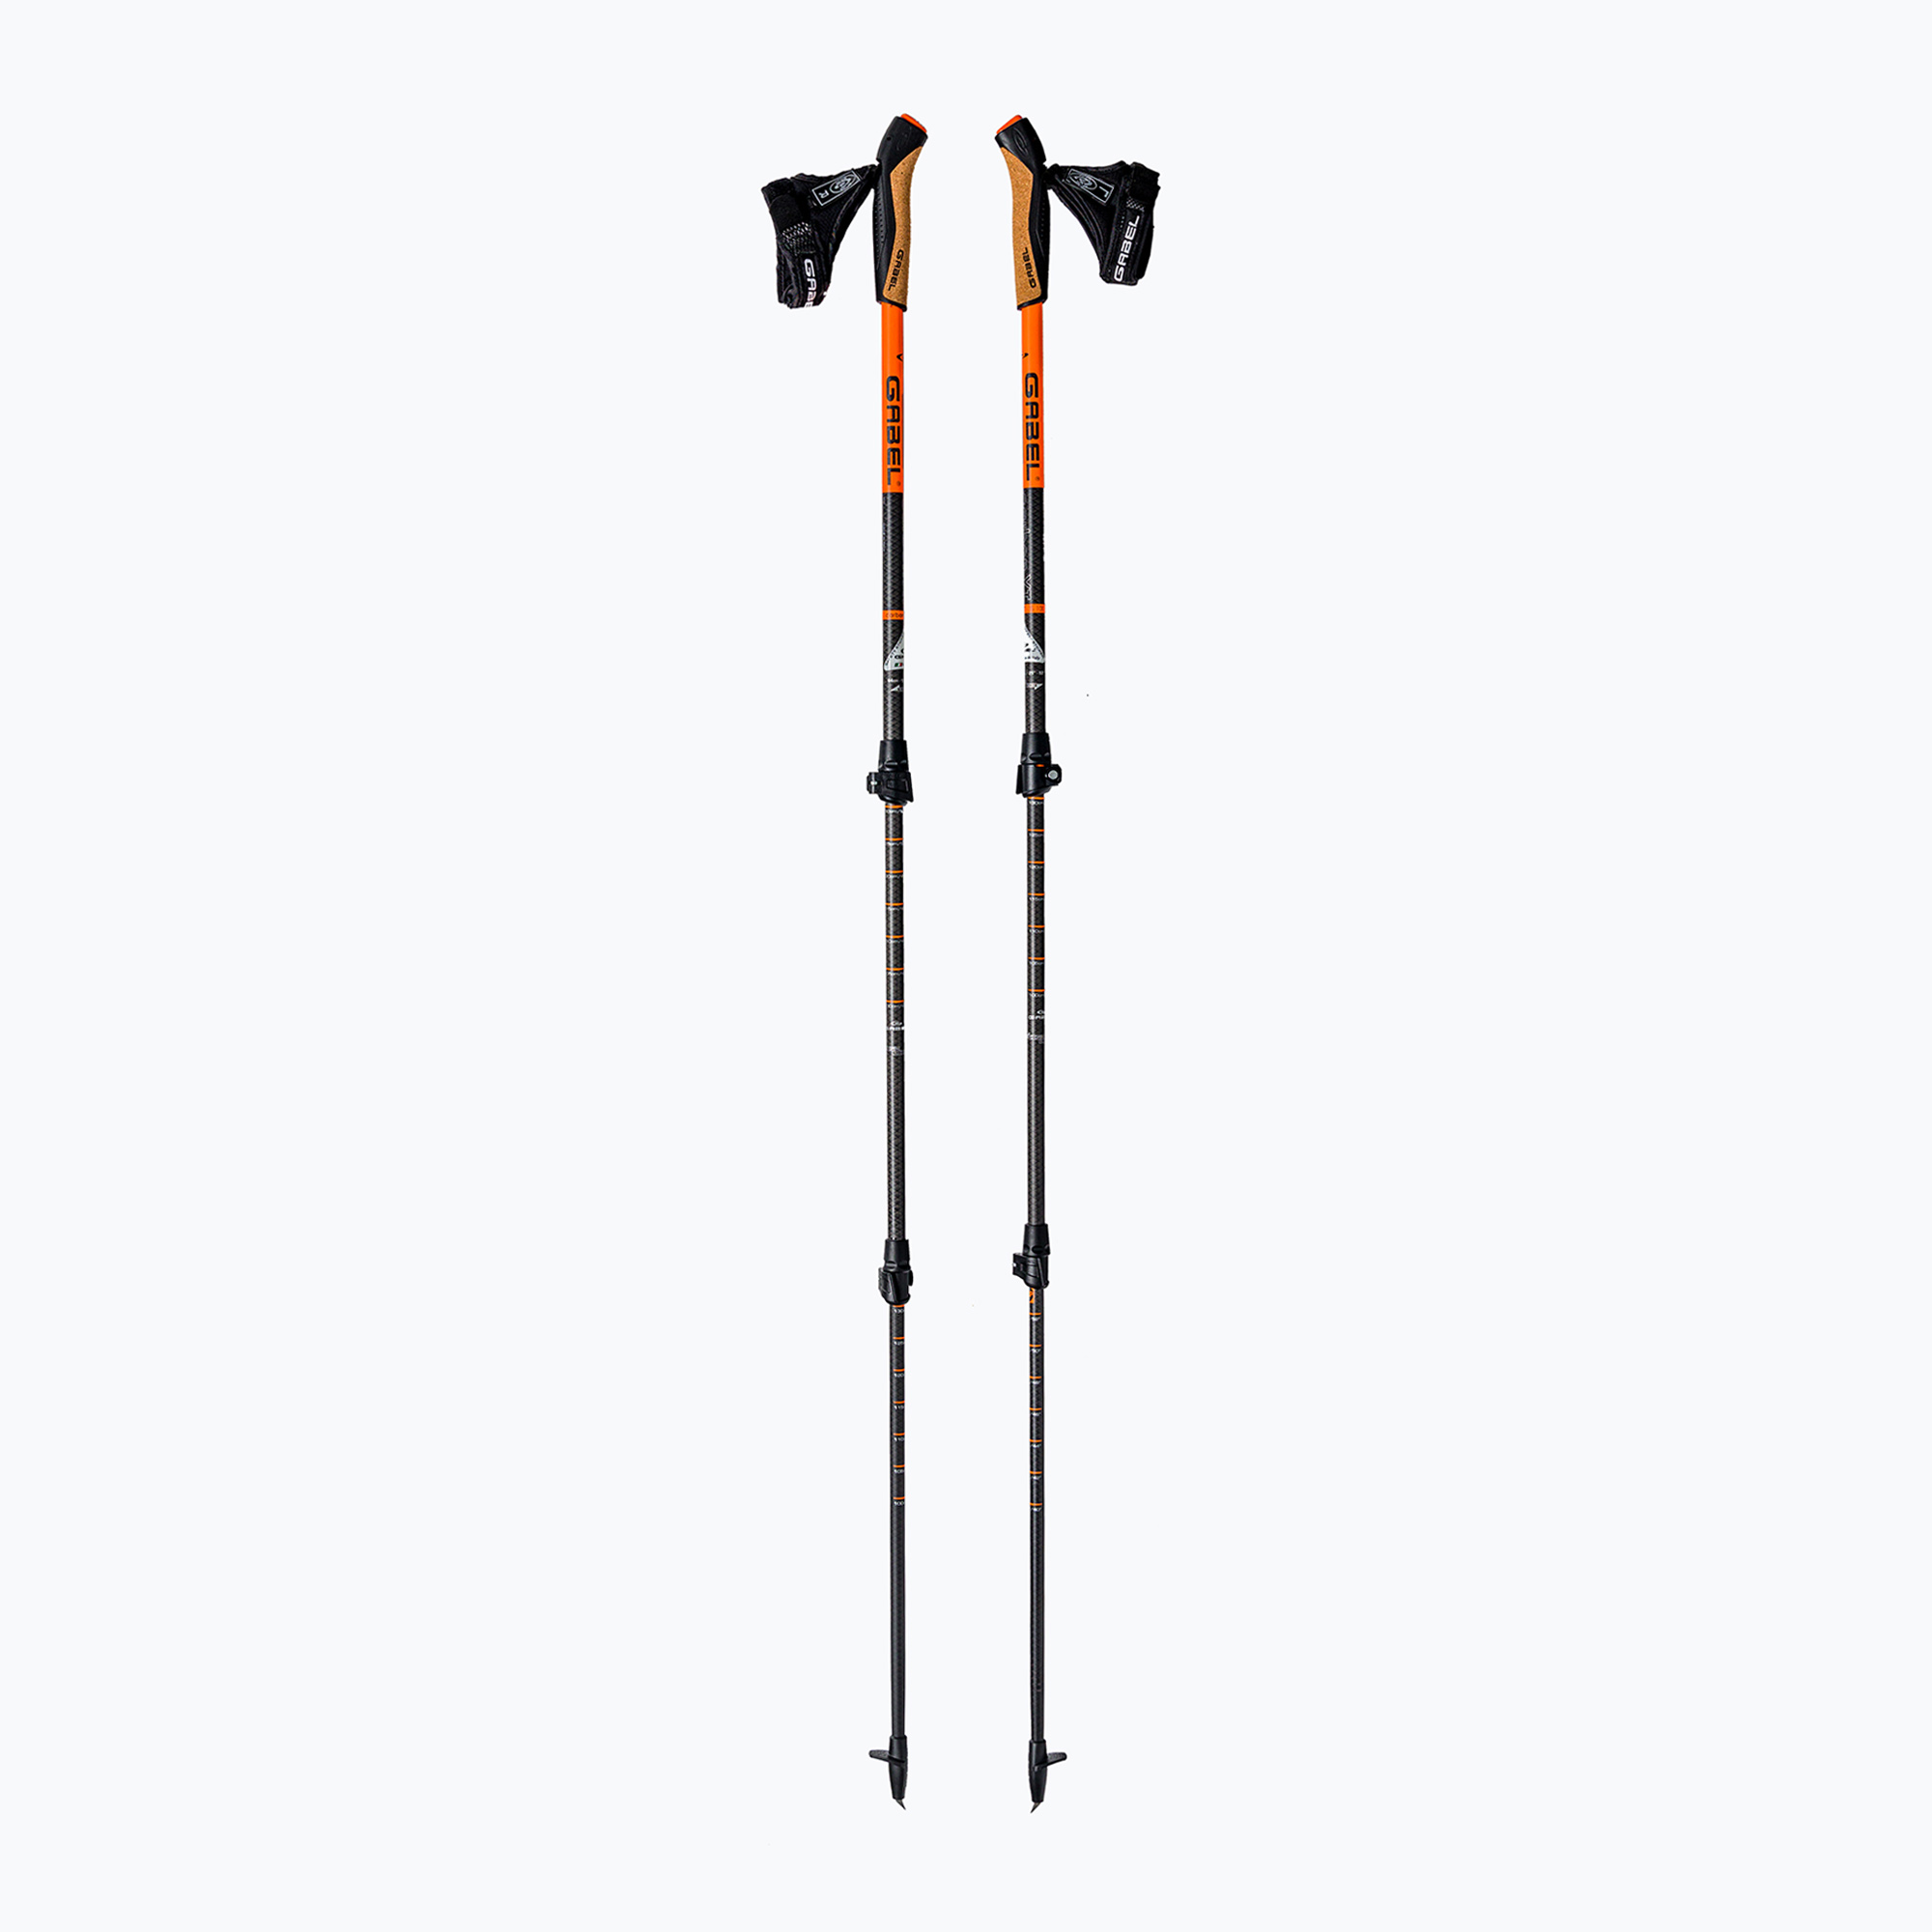 Bețe de nordic walking GABEL Carbon XT 3S 100 F.L. negru-portocalii 7009351420000